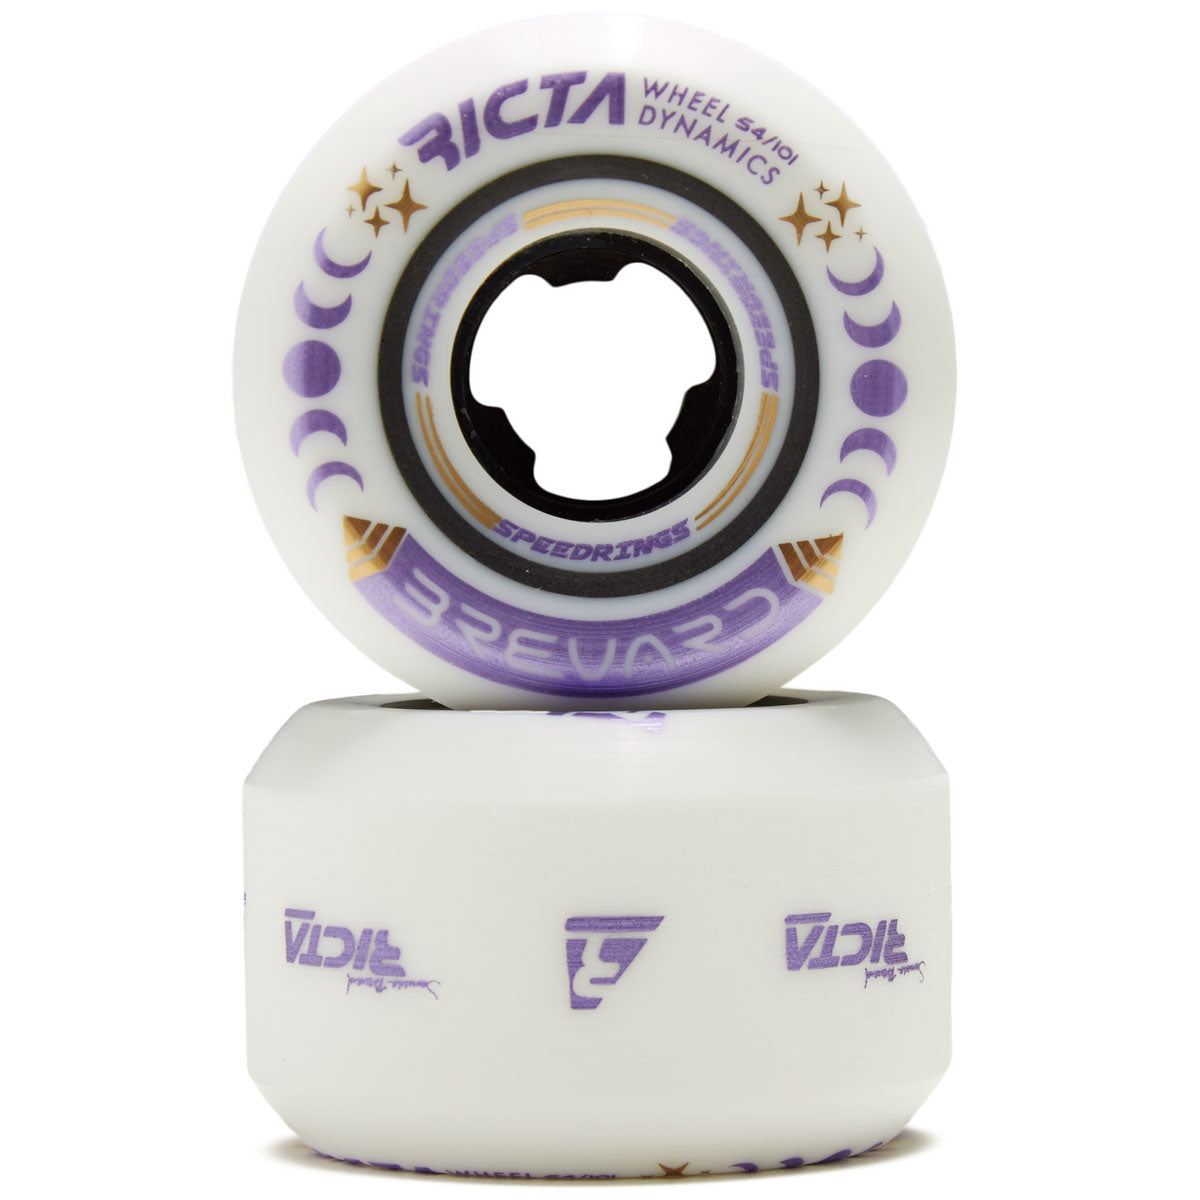 Ricta Brevard Speedrings Wide 101a Skateboard Wheels - White - 54mm image 2